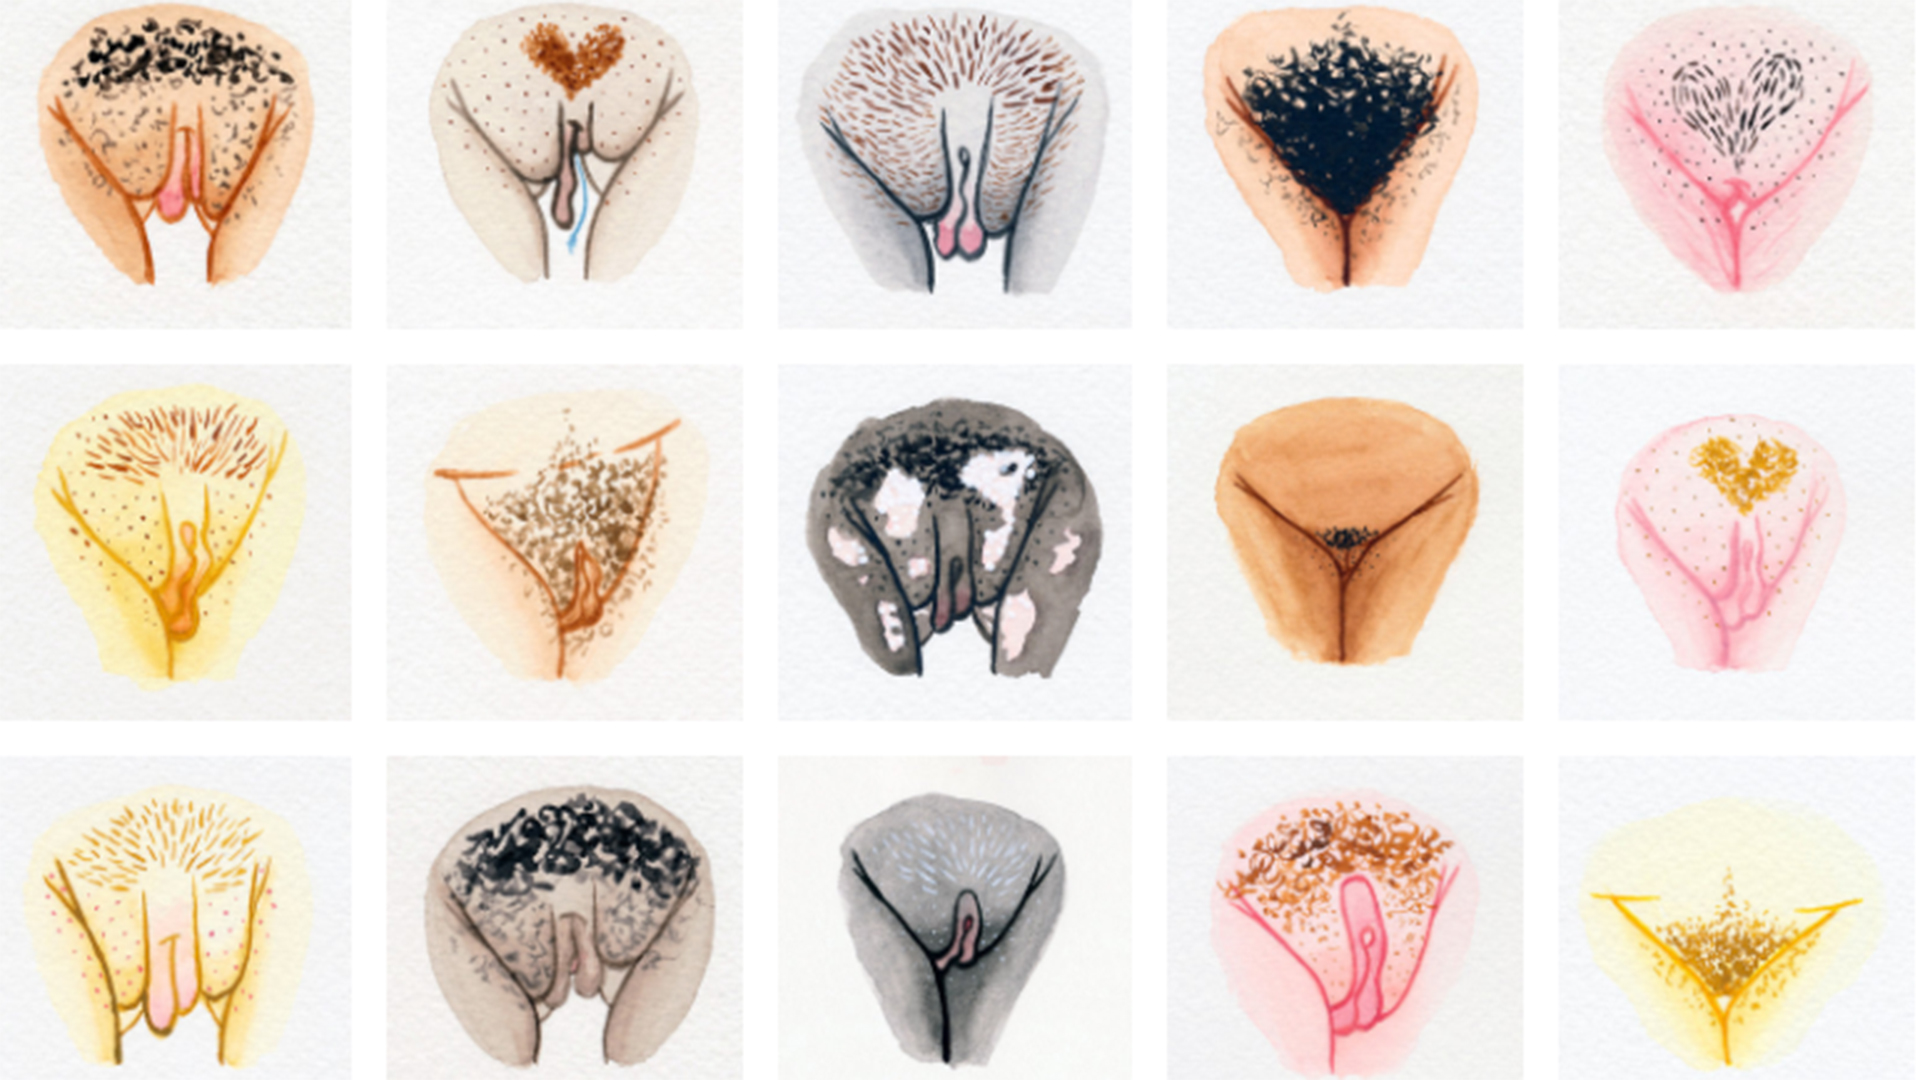 carl halpin recommends Fotos De Diferentes Vajinas